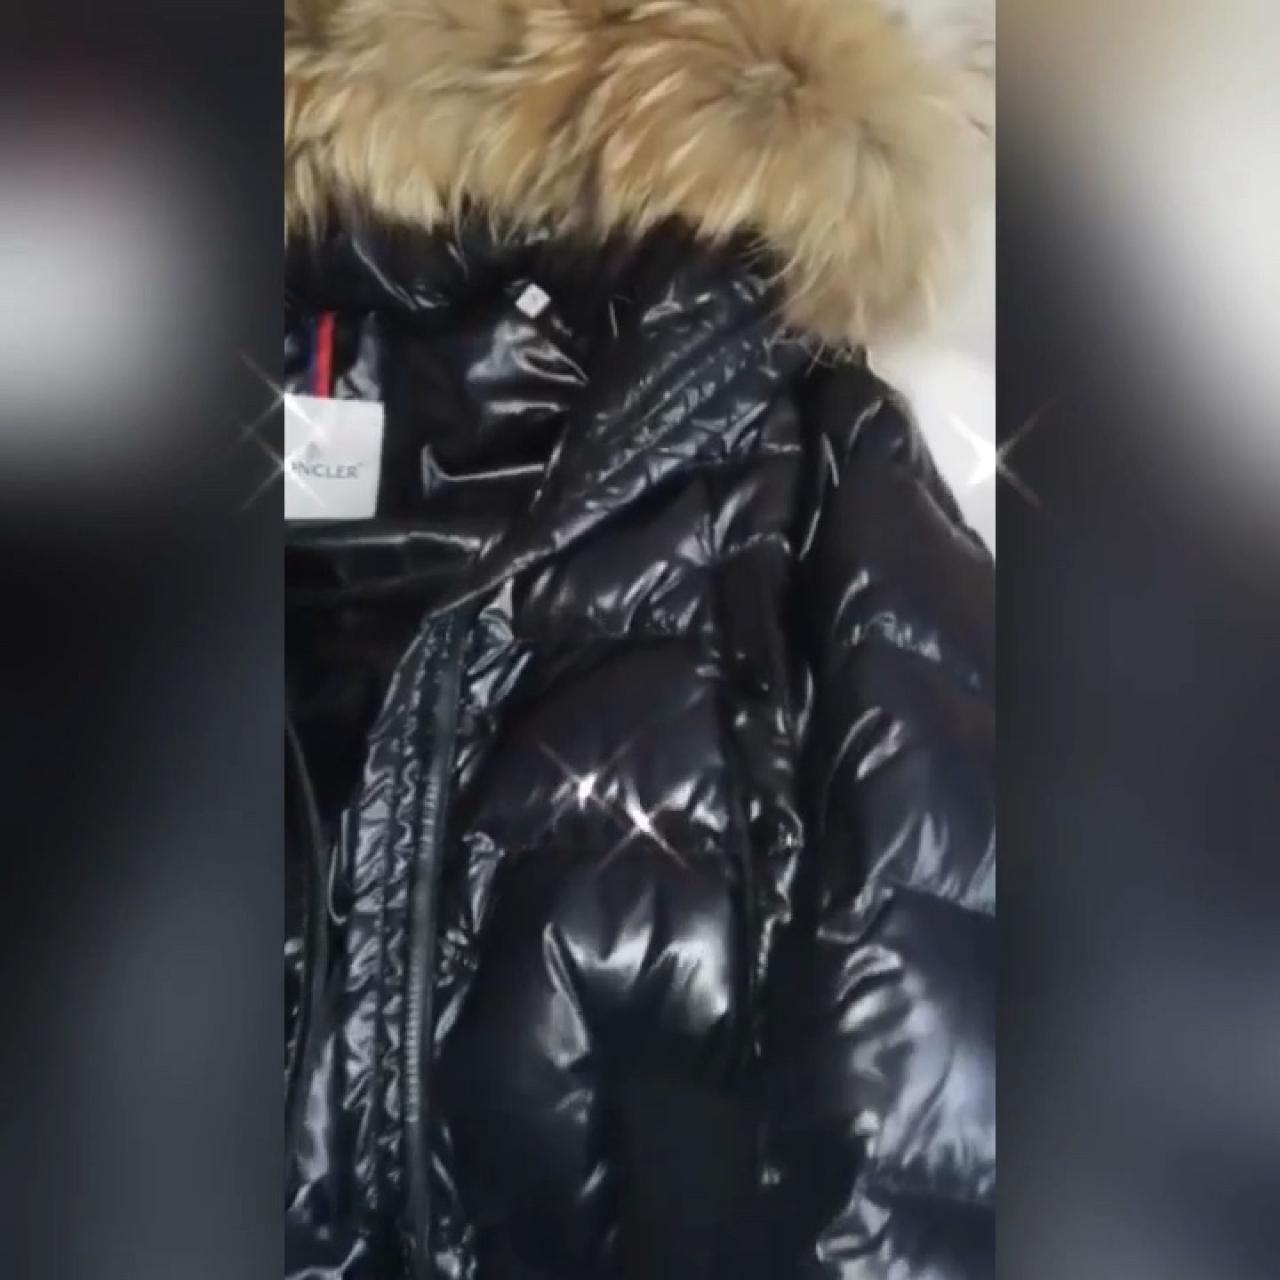 moncler alpin jacket